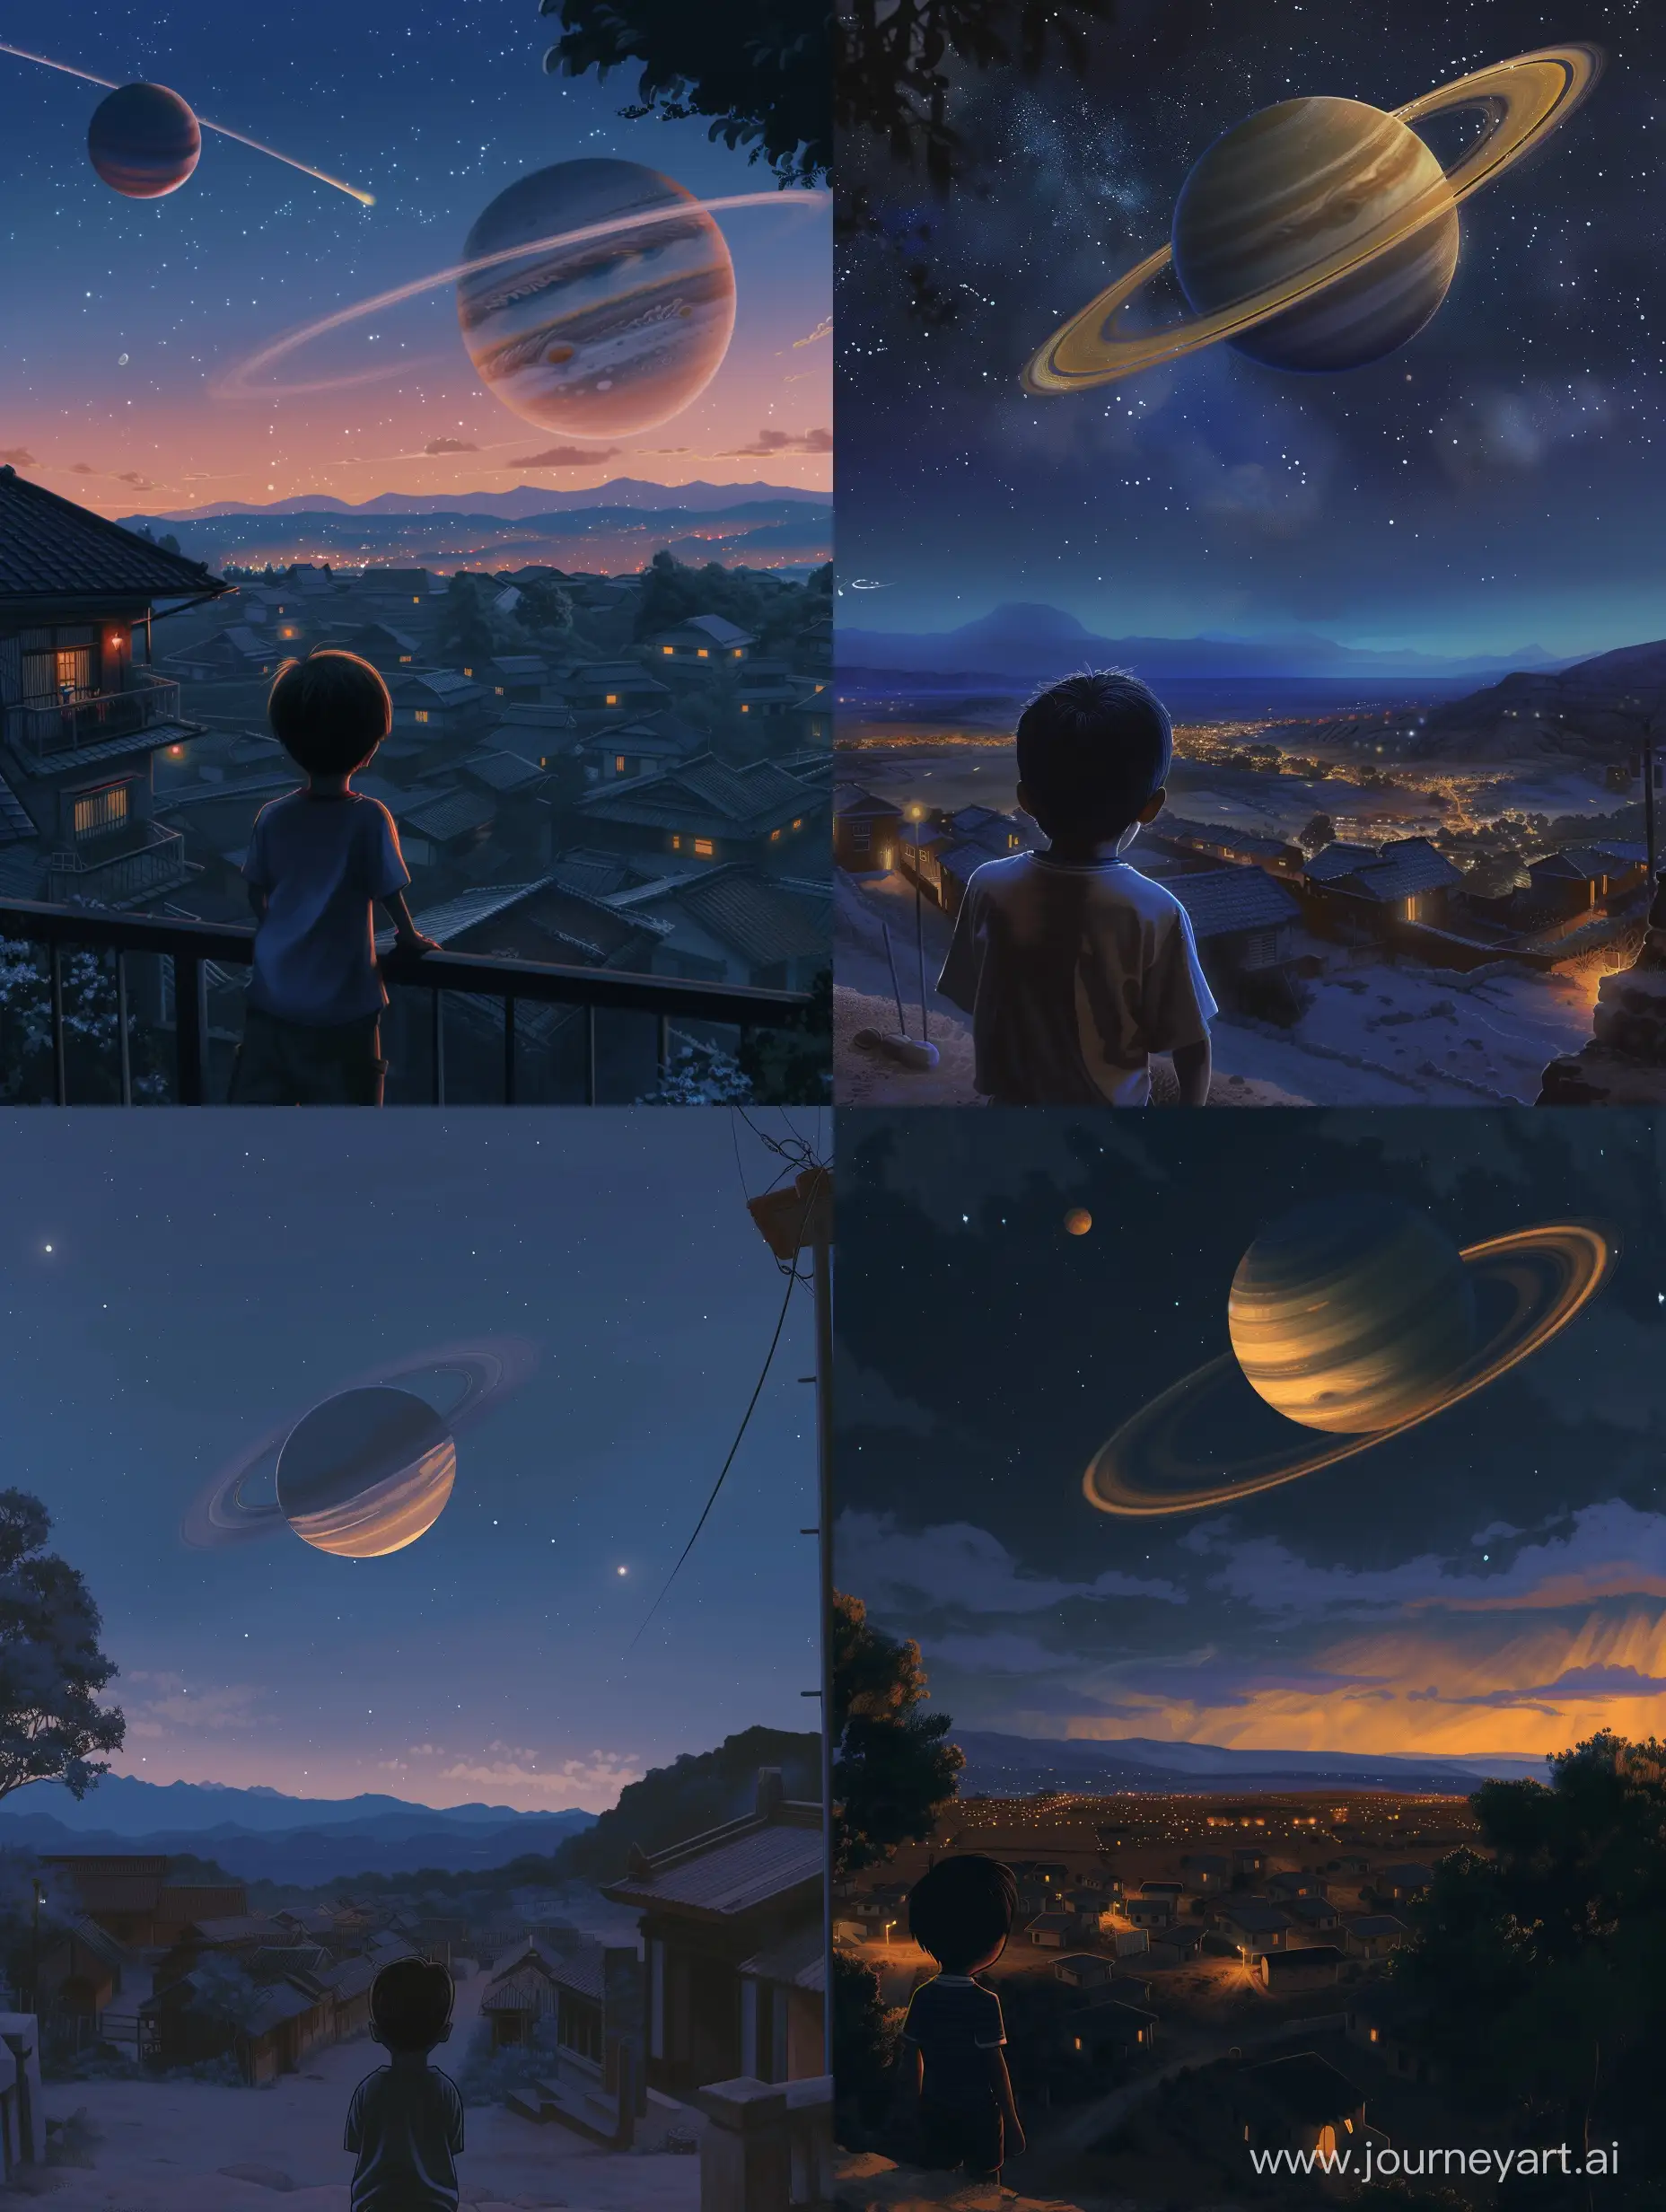 Enchanting-Night-Sky-Boy-Gazes-at-Saturnlike-Planet-in-Village